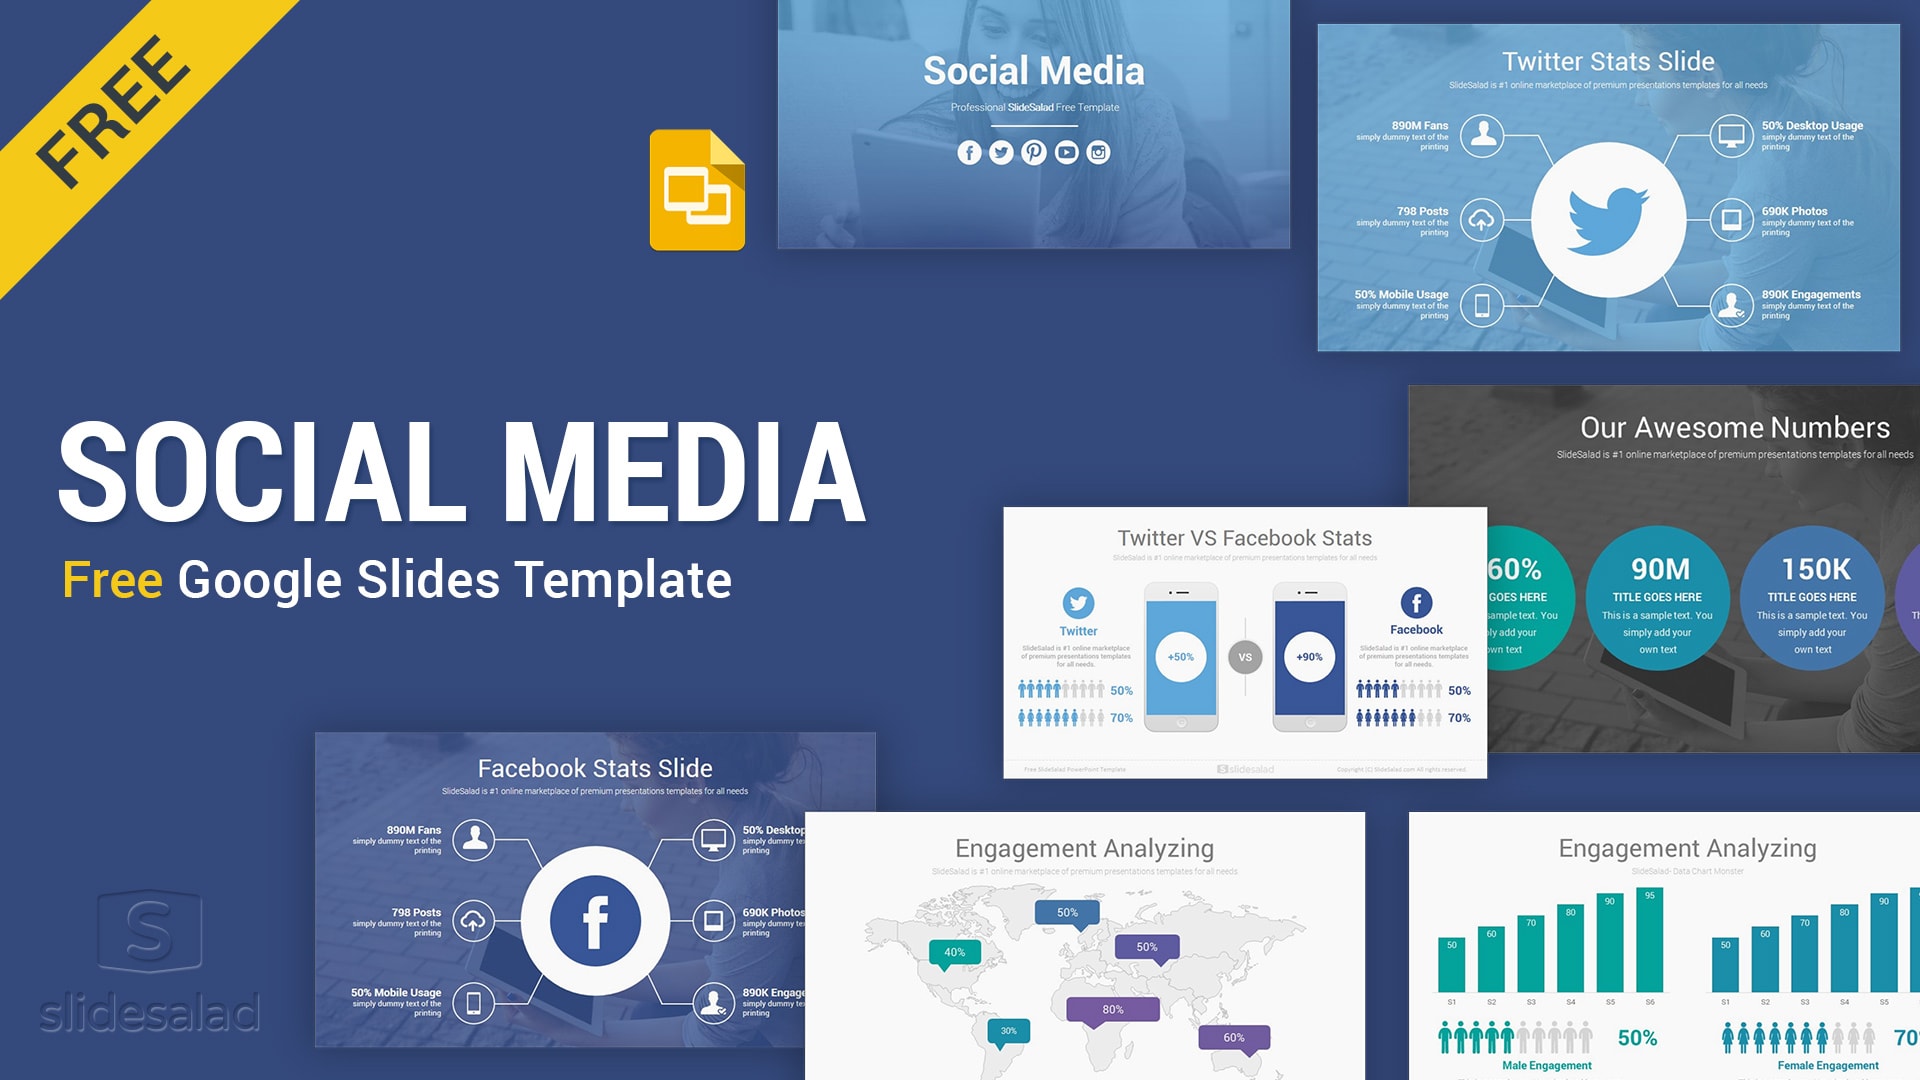 Social Media Free Google Slides Template Themes SlideSalad